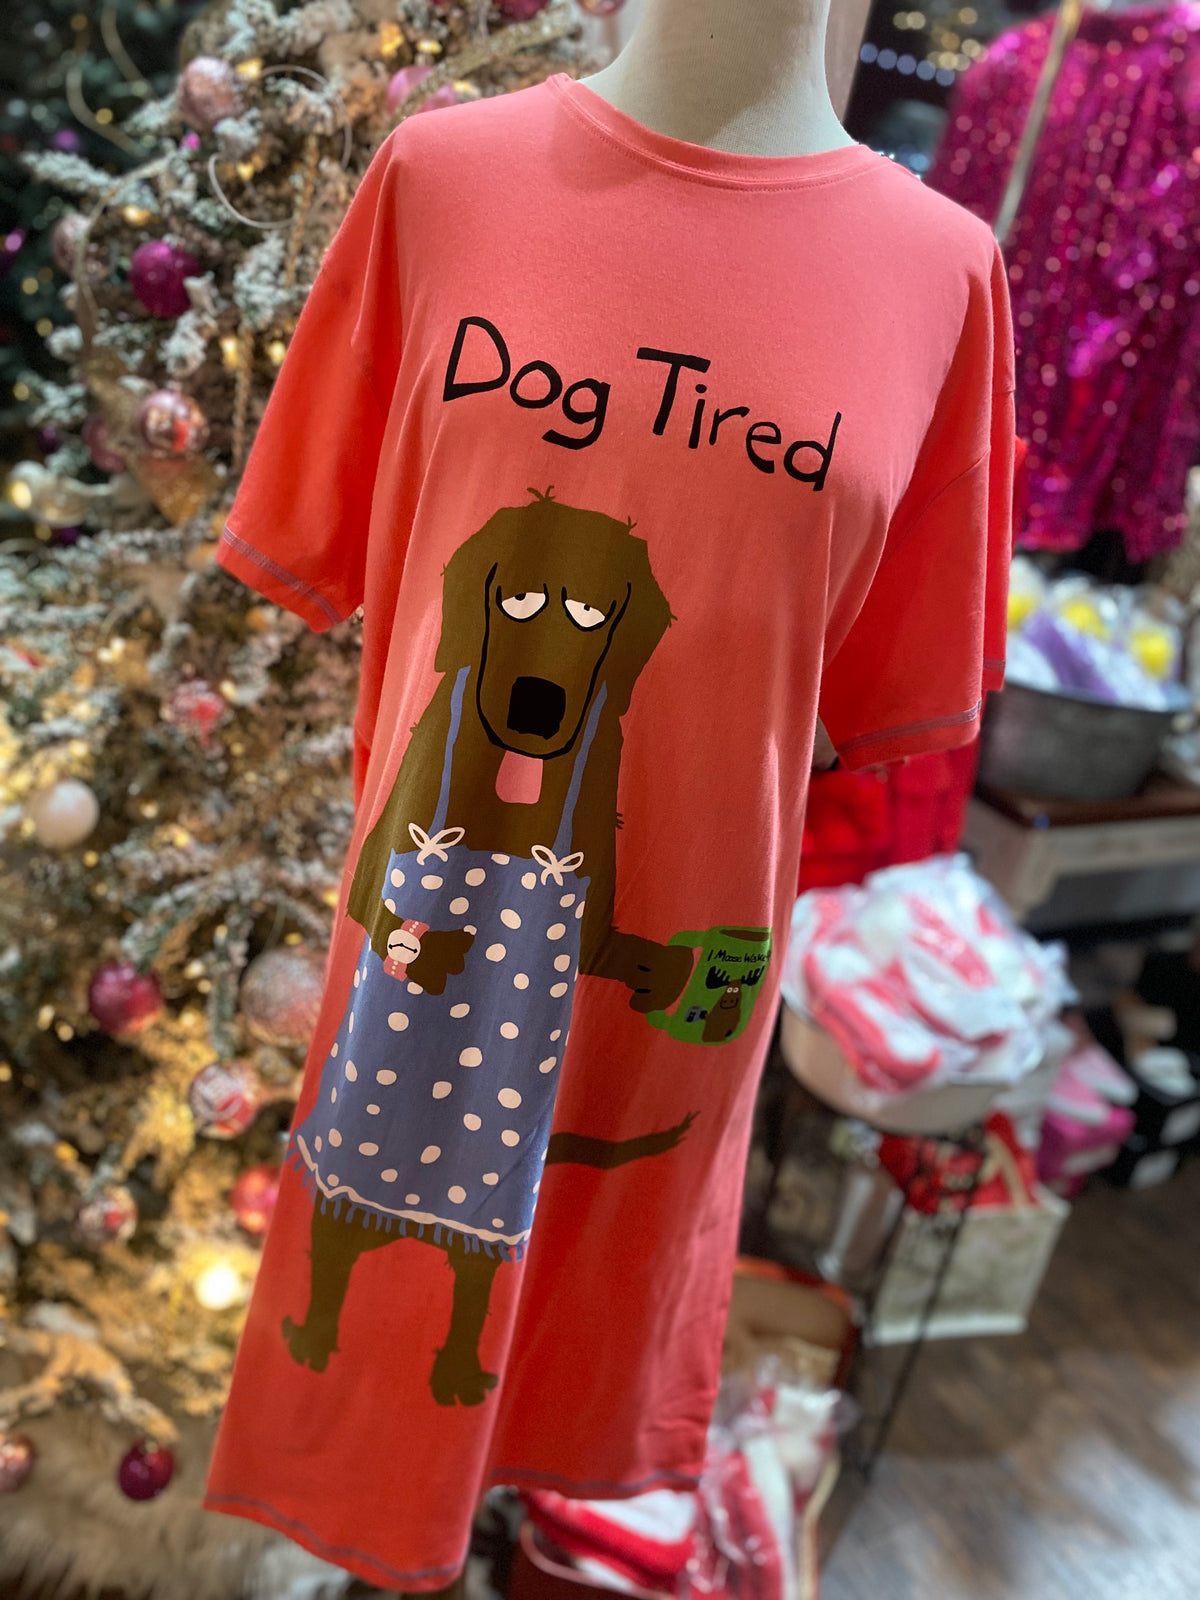 Dog Tired Sleepshirt